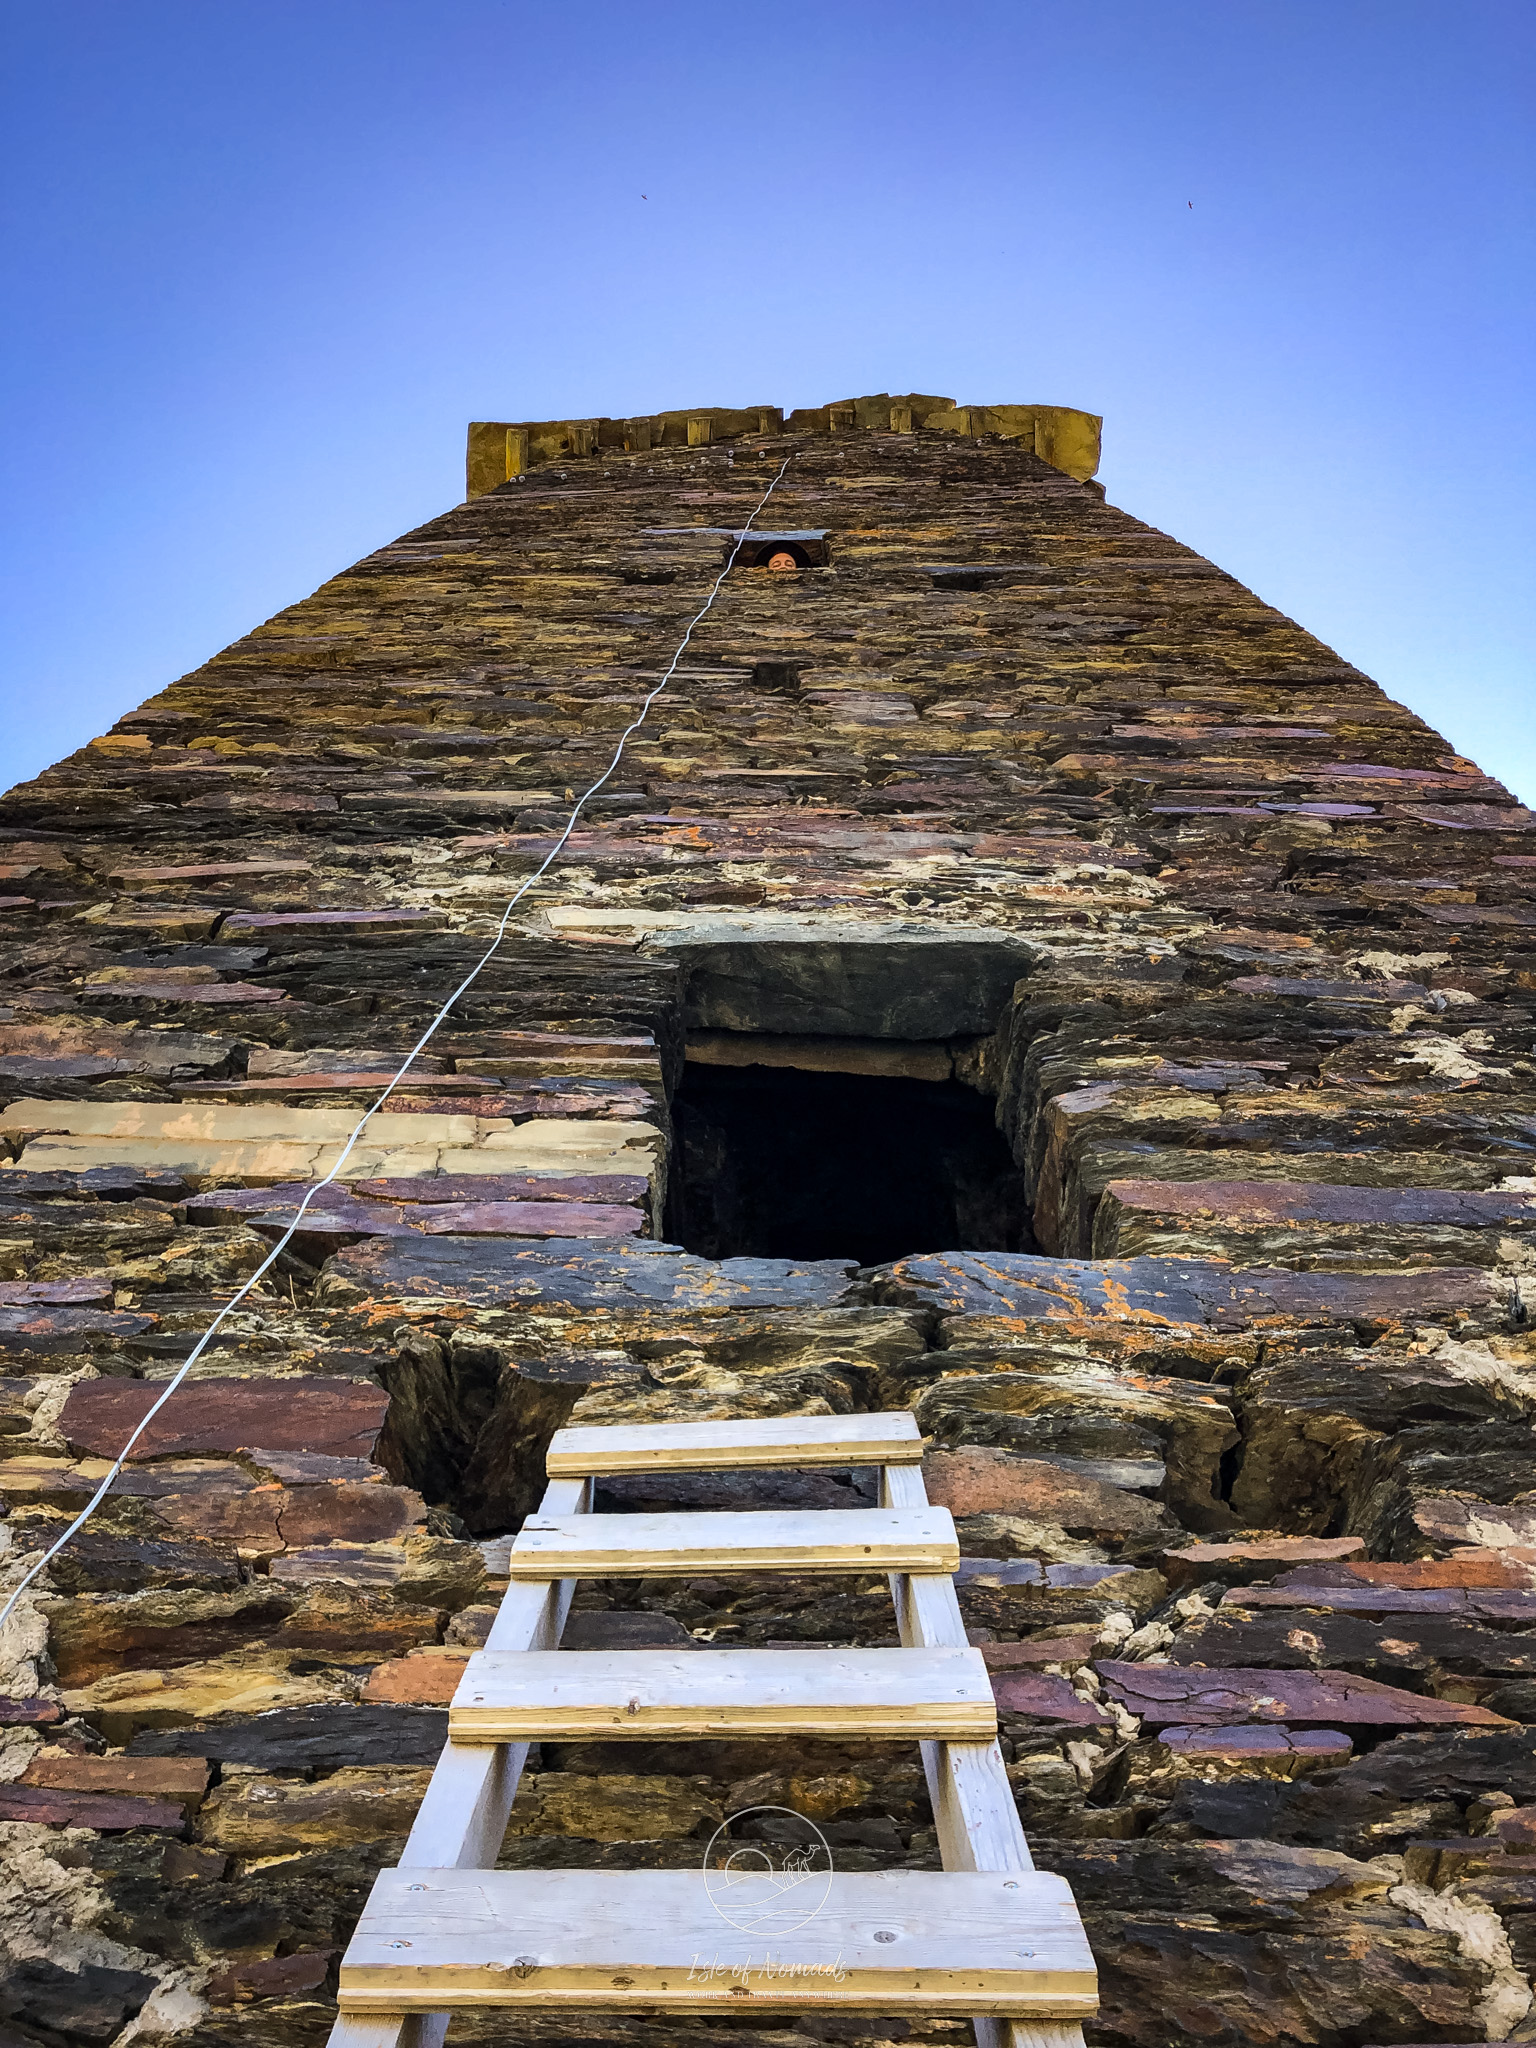 Climbing a Svan Tower is not for the faint of heart